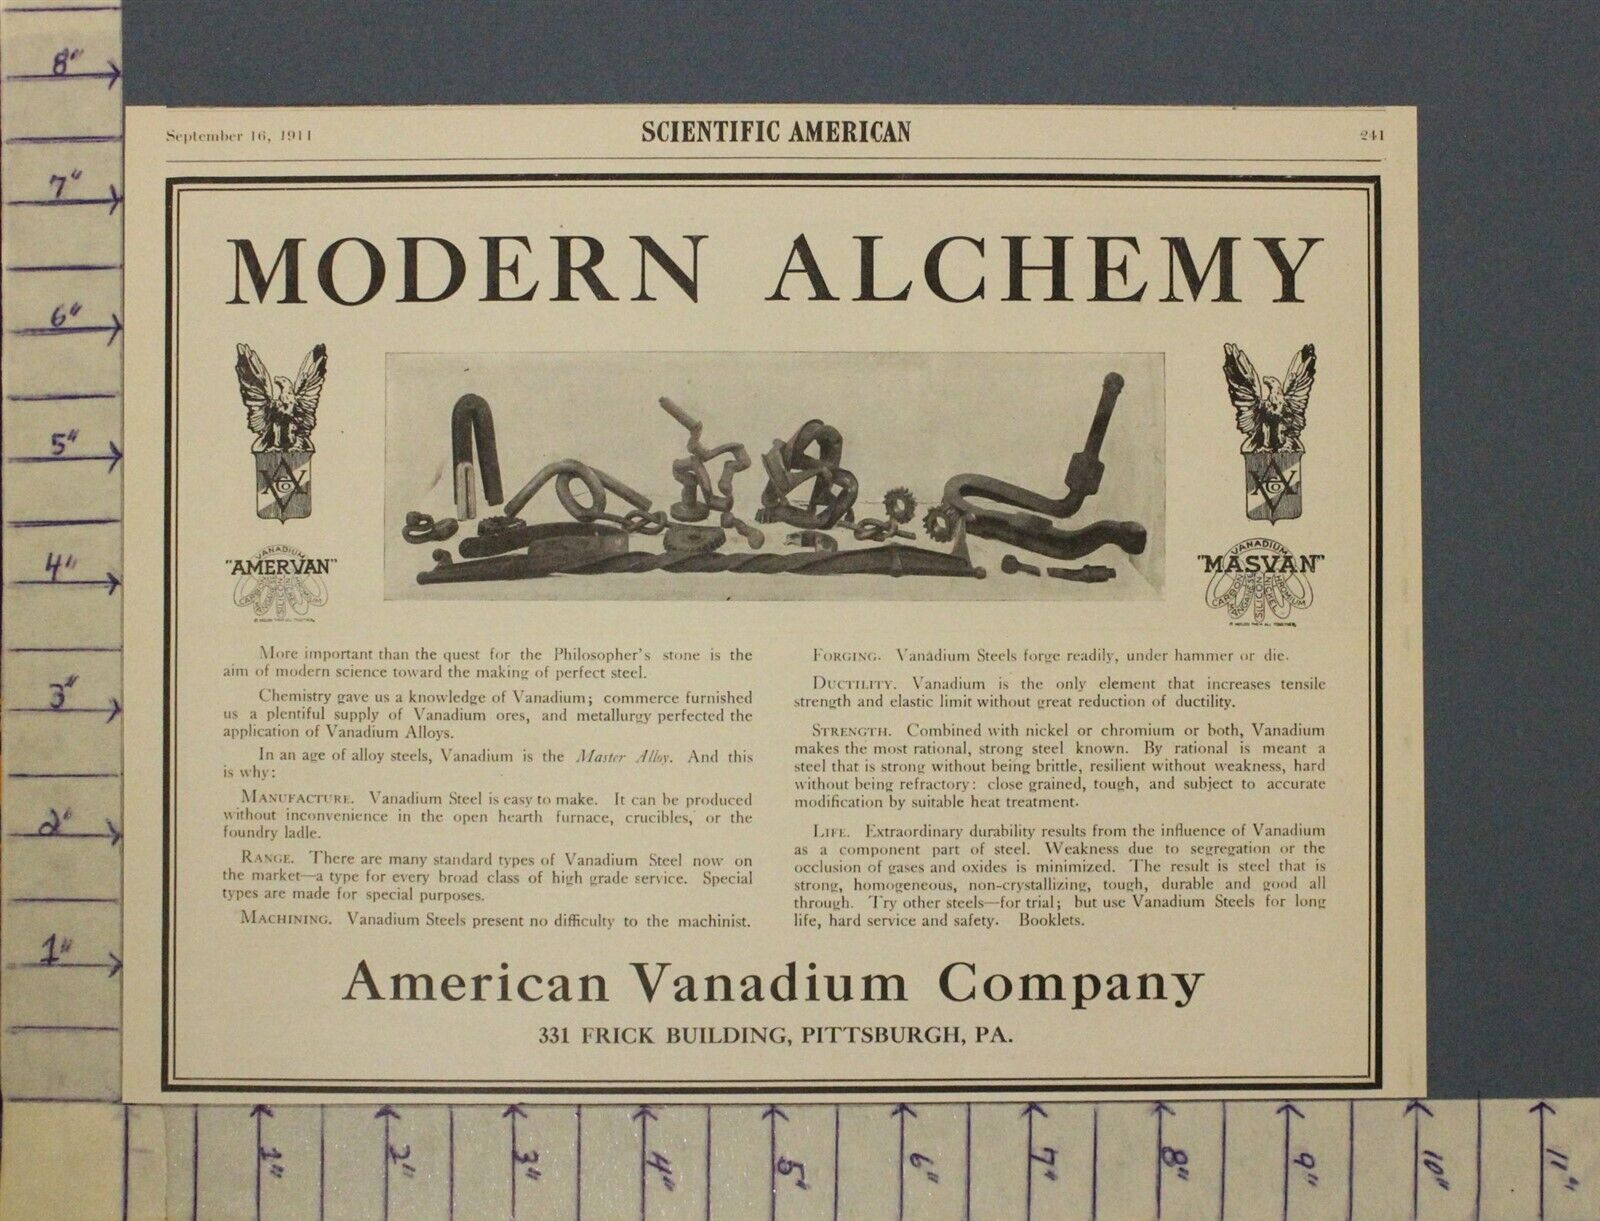 1911 AMERICAN VANADIUM COMPANY TECHNOLOGY FORGING AMERVAN HISTORIC AD A-2285